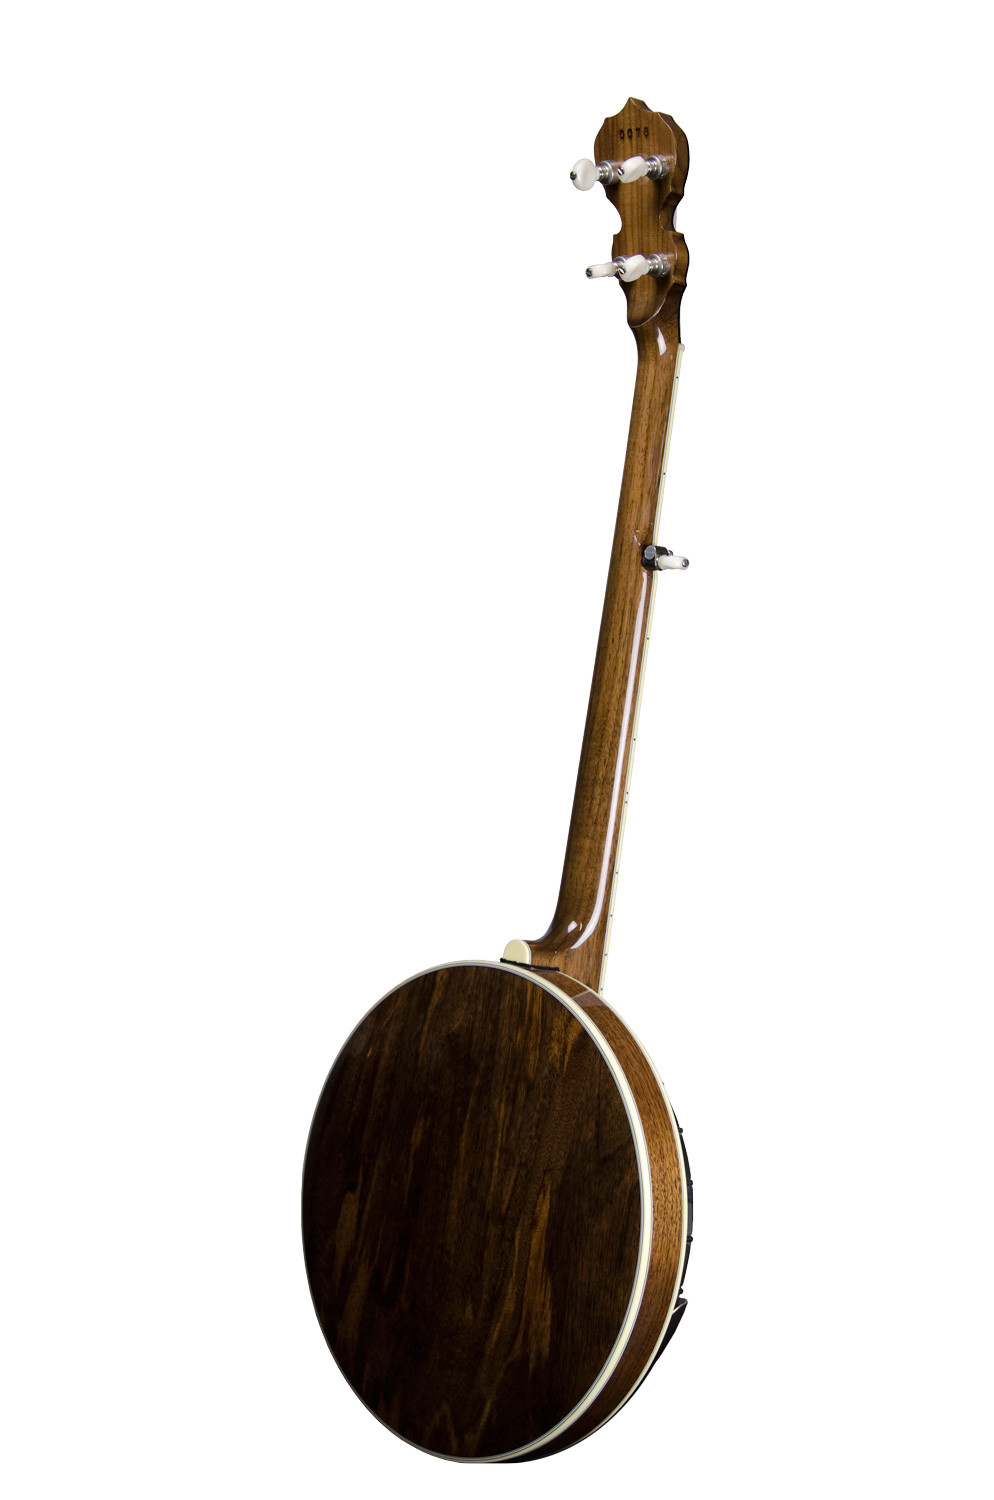 Deering Terry Baucom Model 5-String Banjo